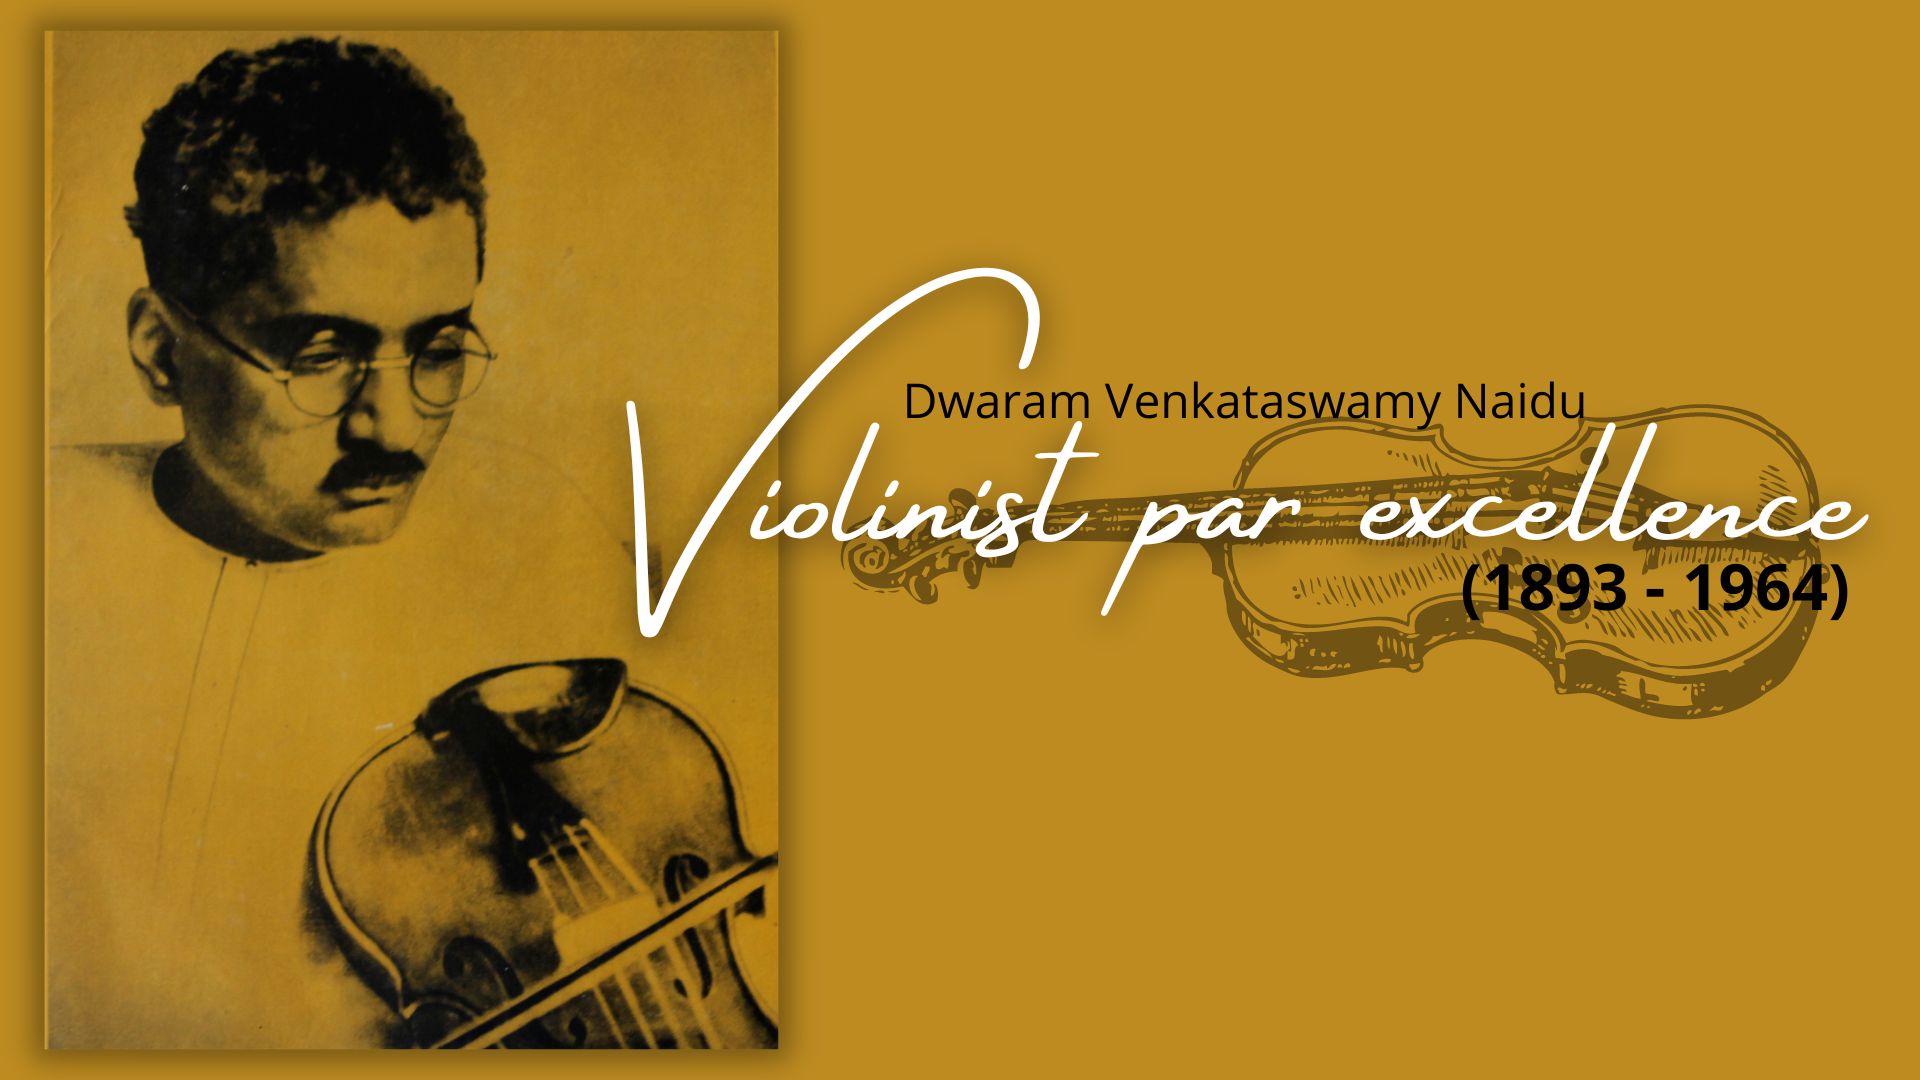 Dwaram Venkataswamy Naidu - Violinist Par Excellence (1893 - 1964)